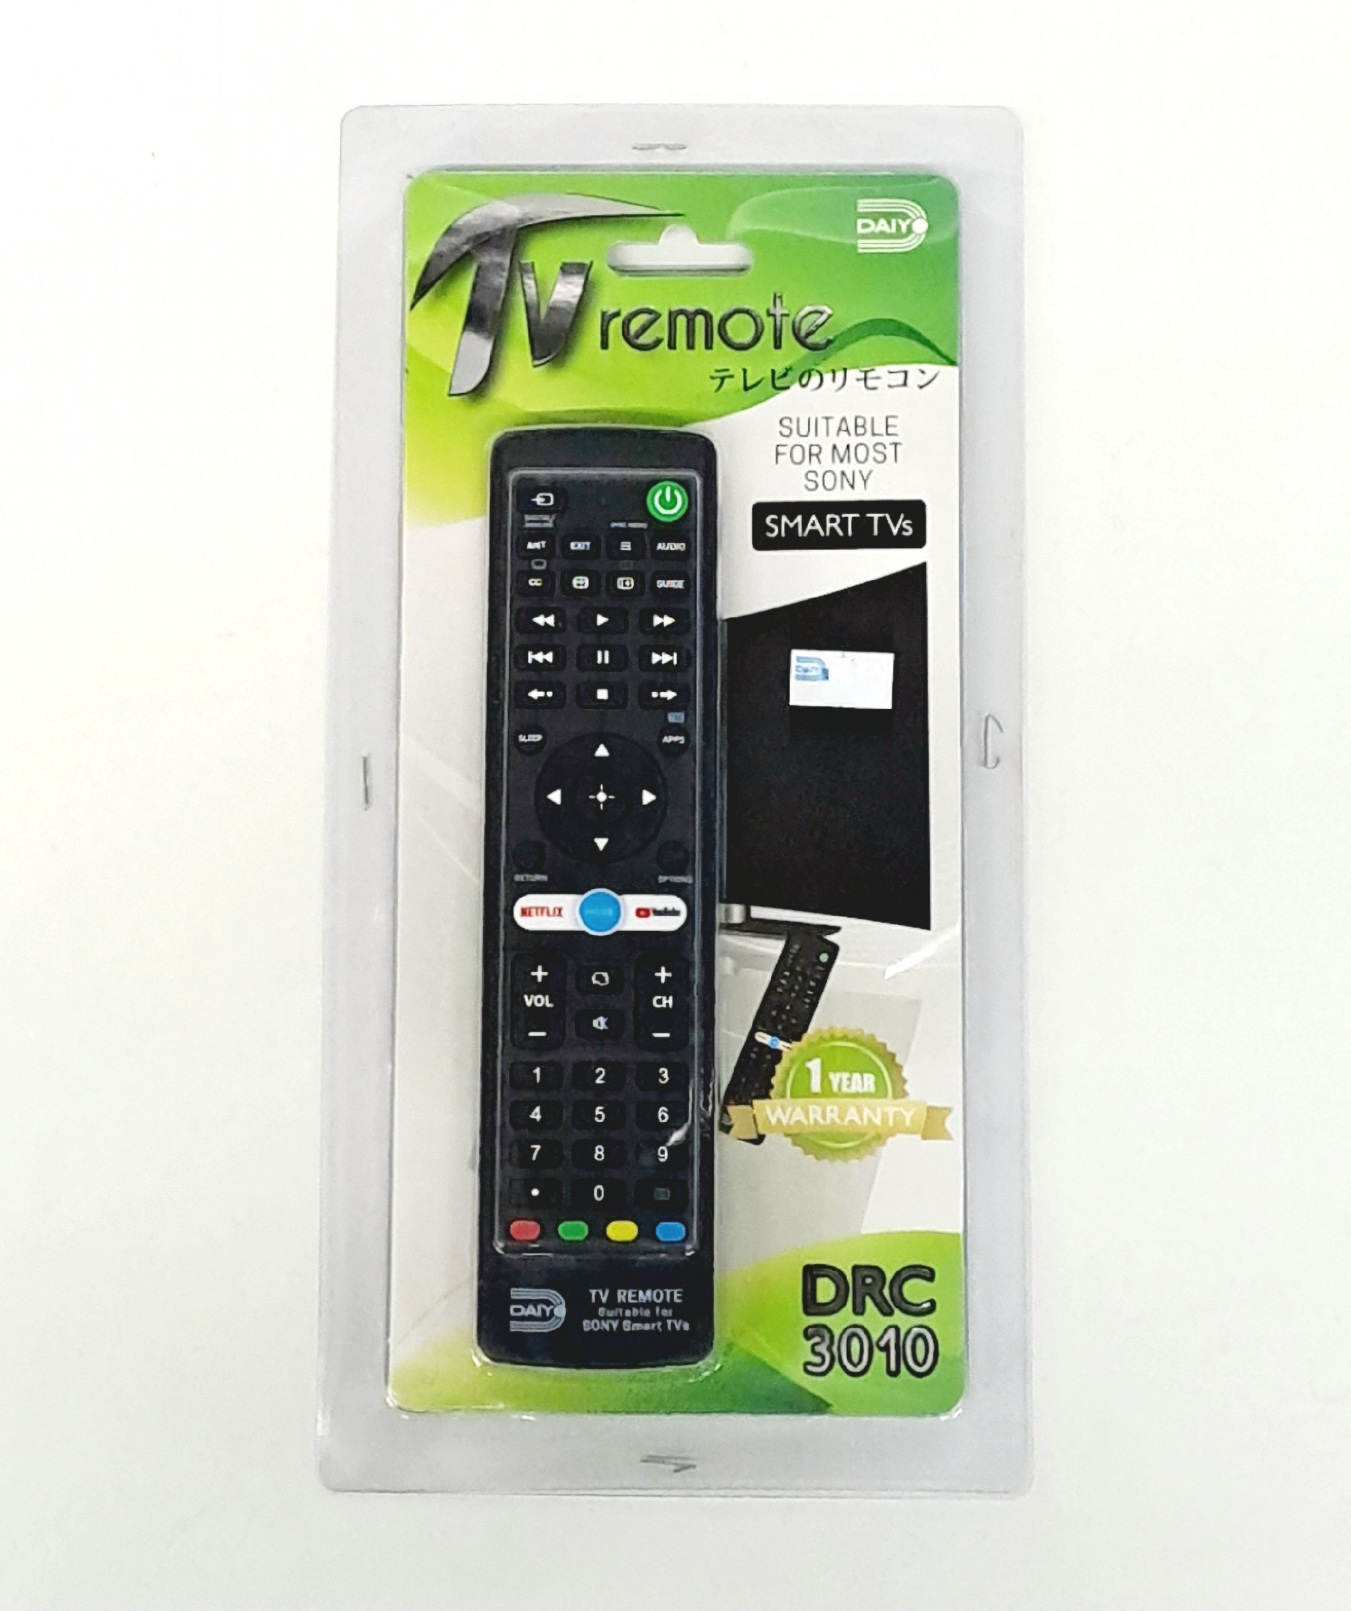 Daiyo Remote Control for Sony Smart Tvs